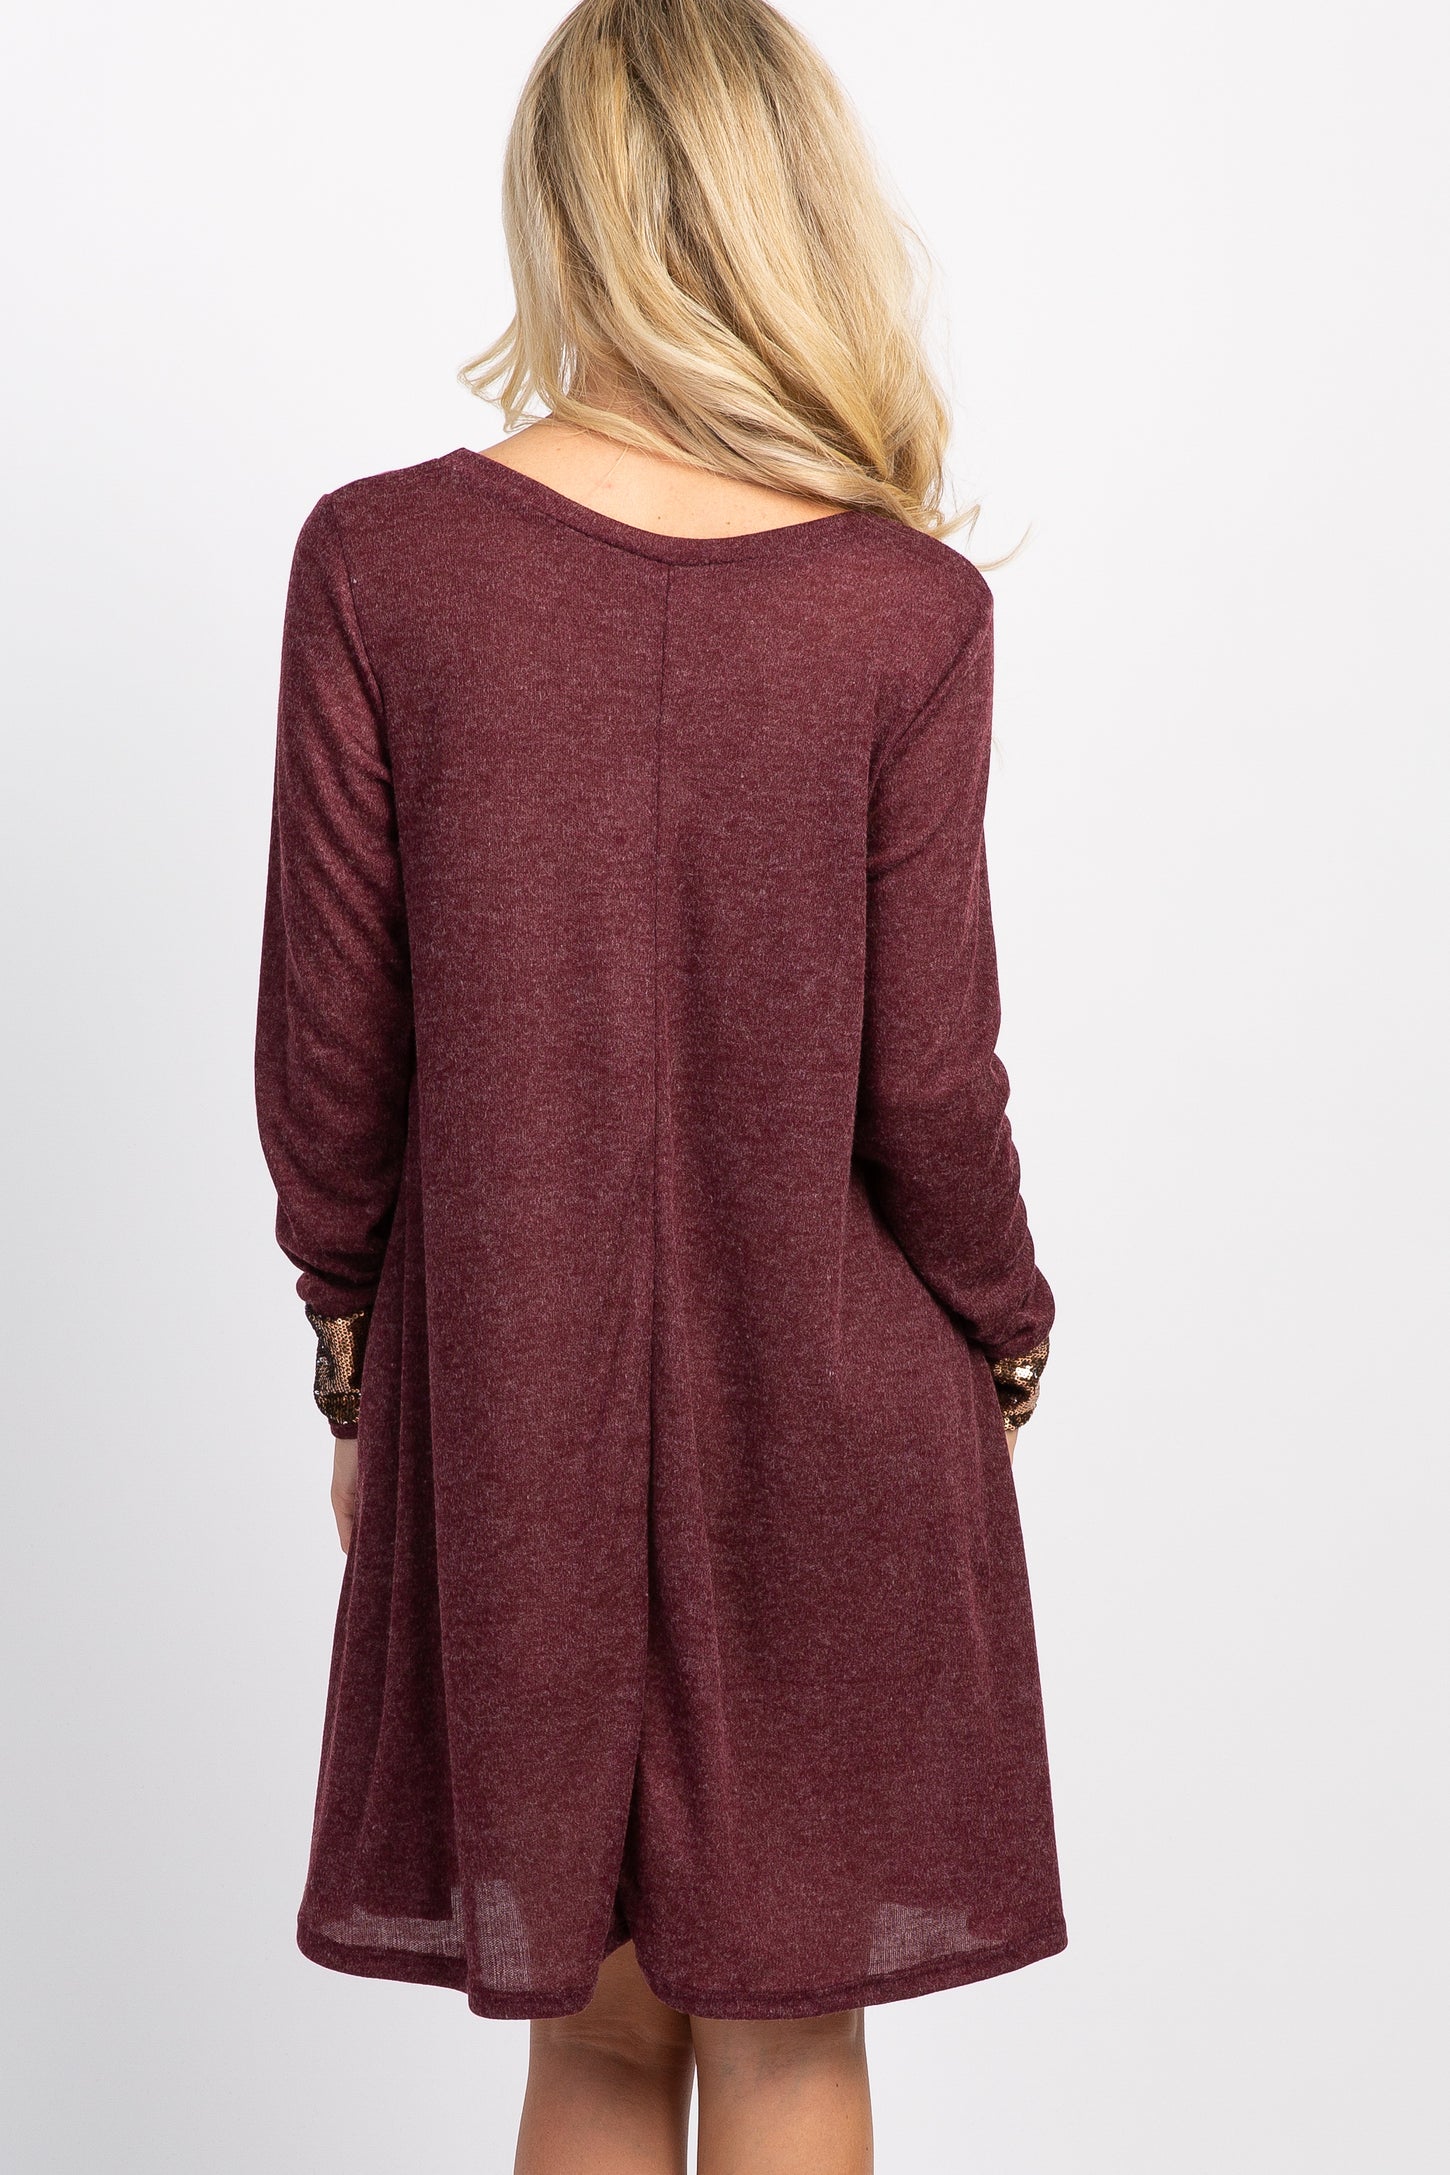 Burgundy Long Sleeve Sequin Dress